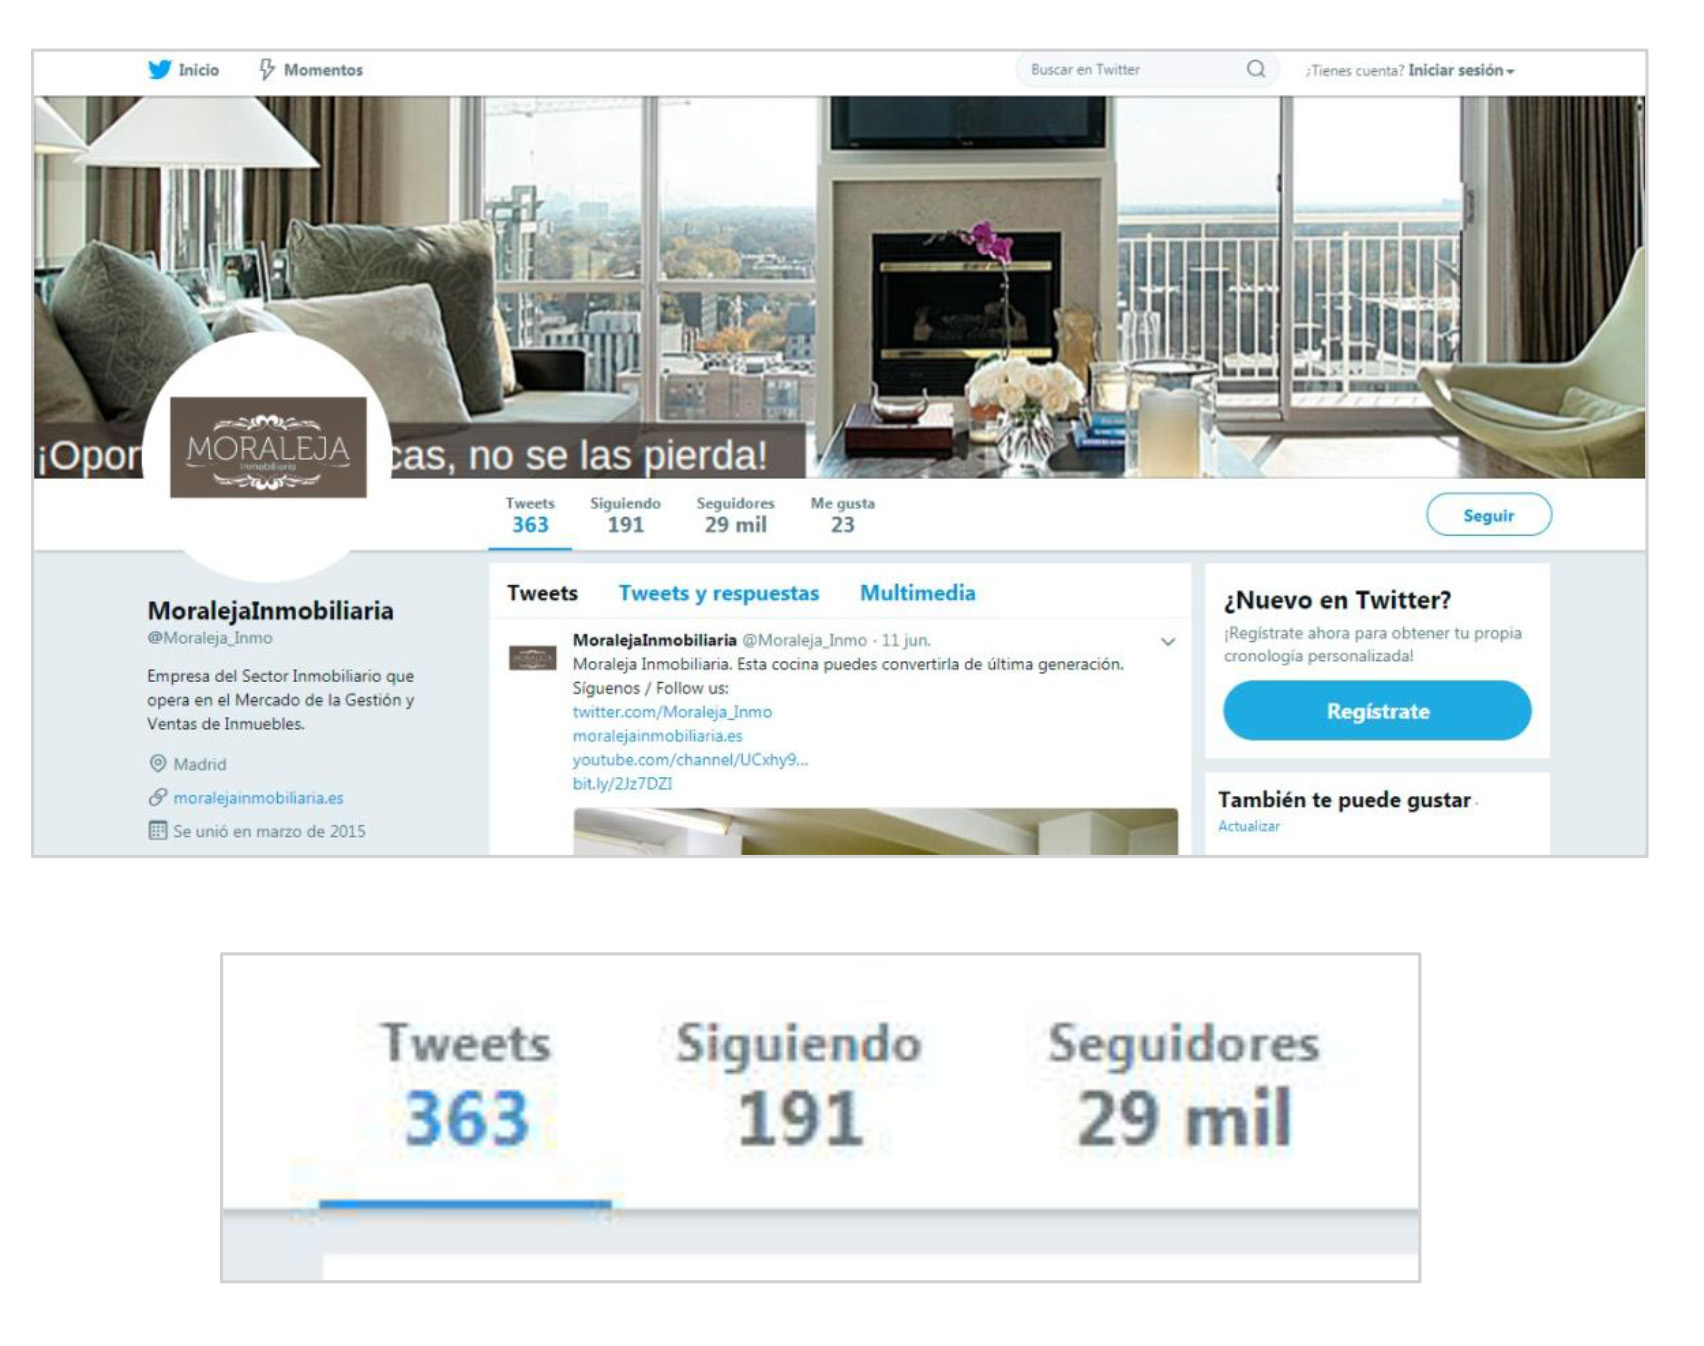 Social networks for real estate: Twitter